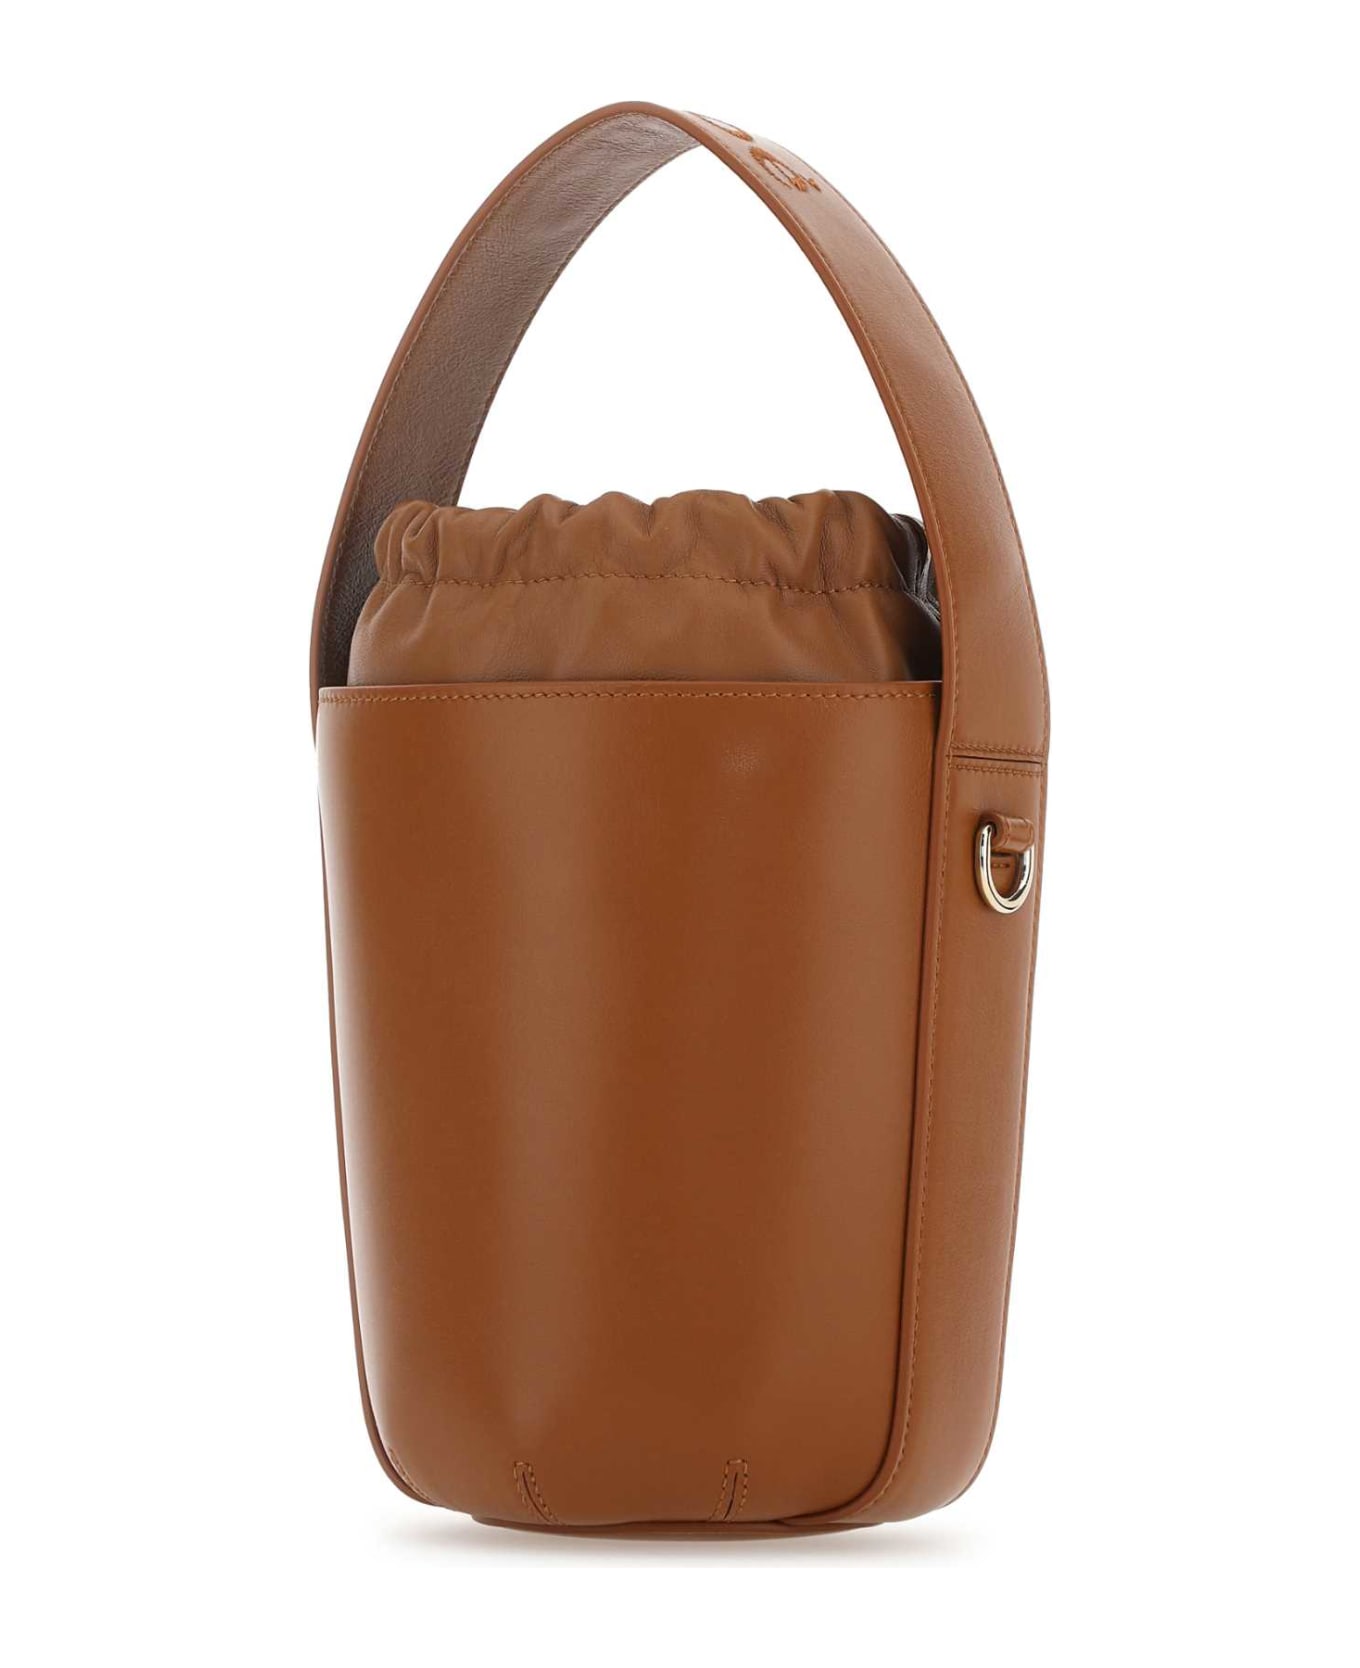 Chloé Caramel Leather Bucket Bag - CARAMEL